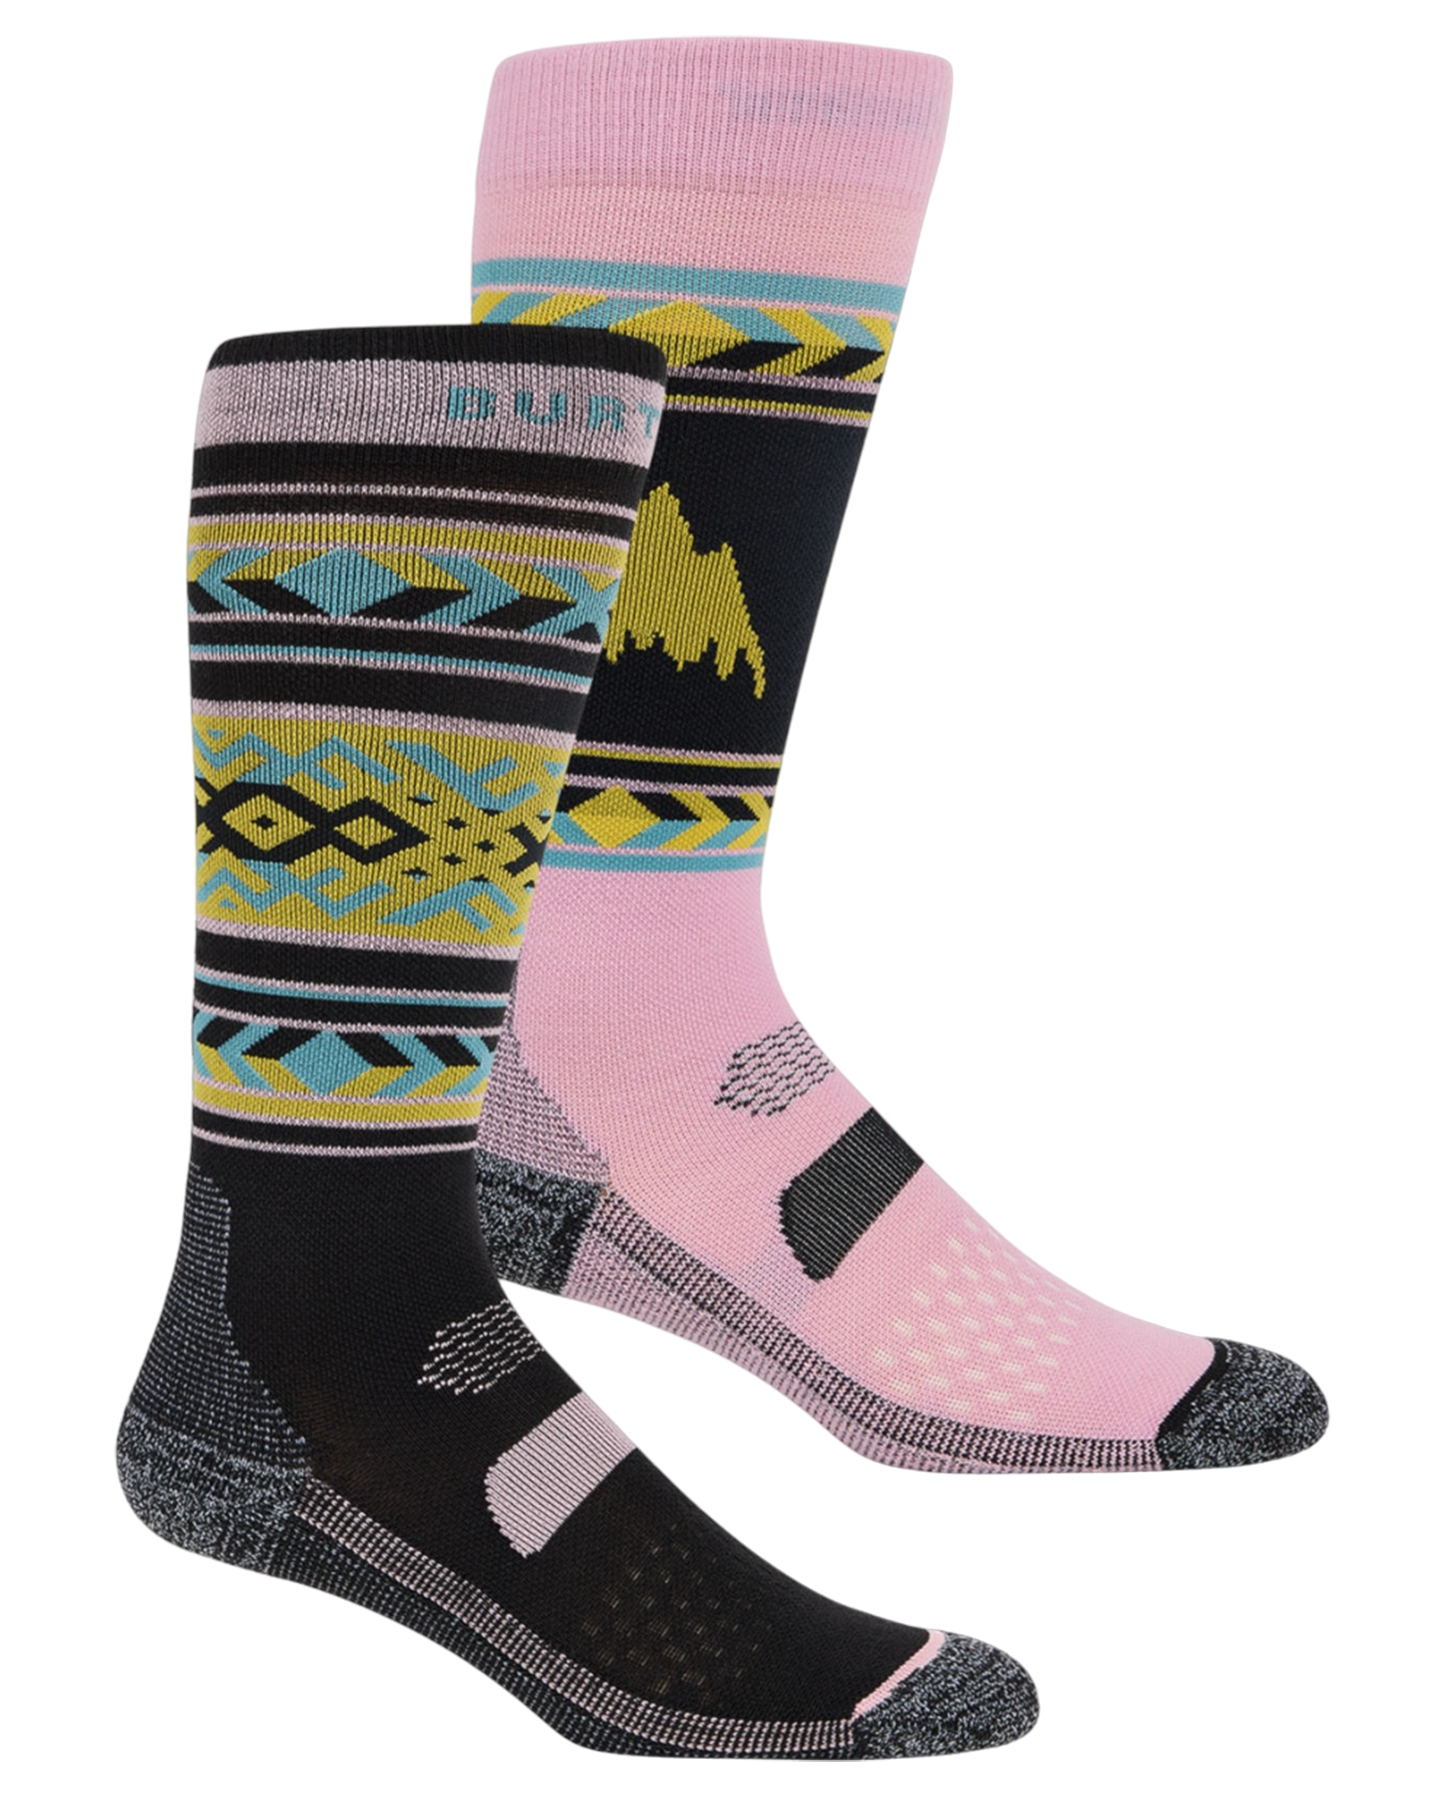 Burton Women's Performance Lightweight Sock 2-Pack - Powder Blush Socks - Trojan Wake Ski Snow